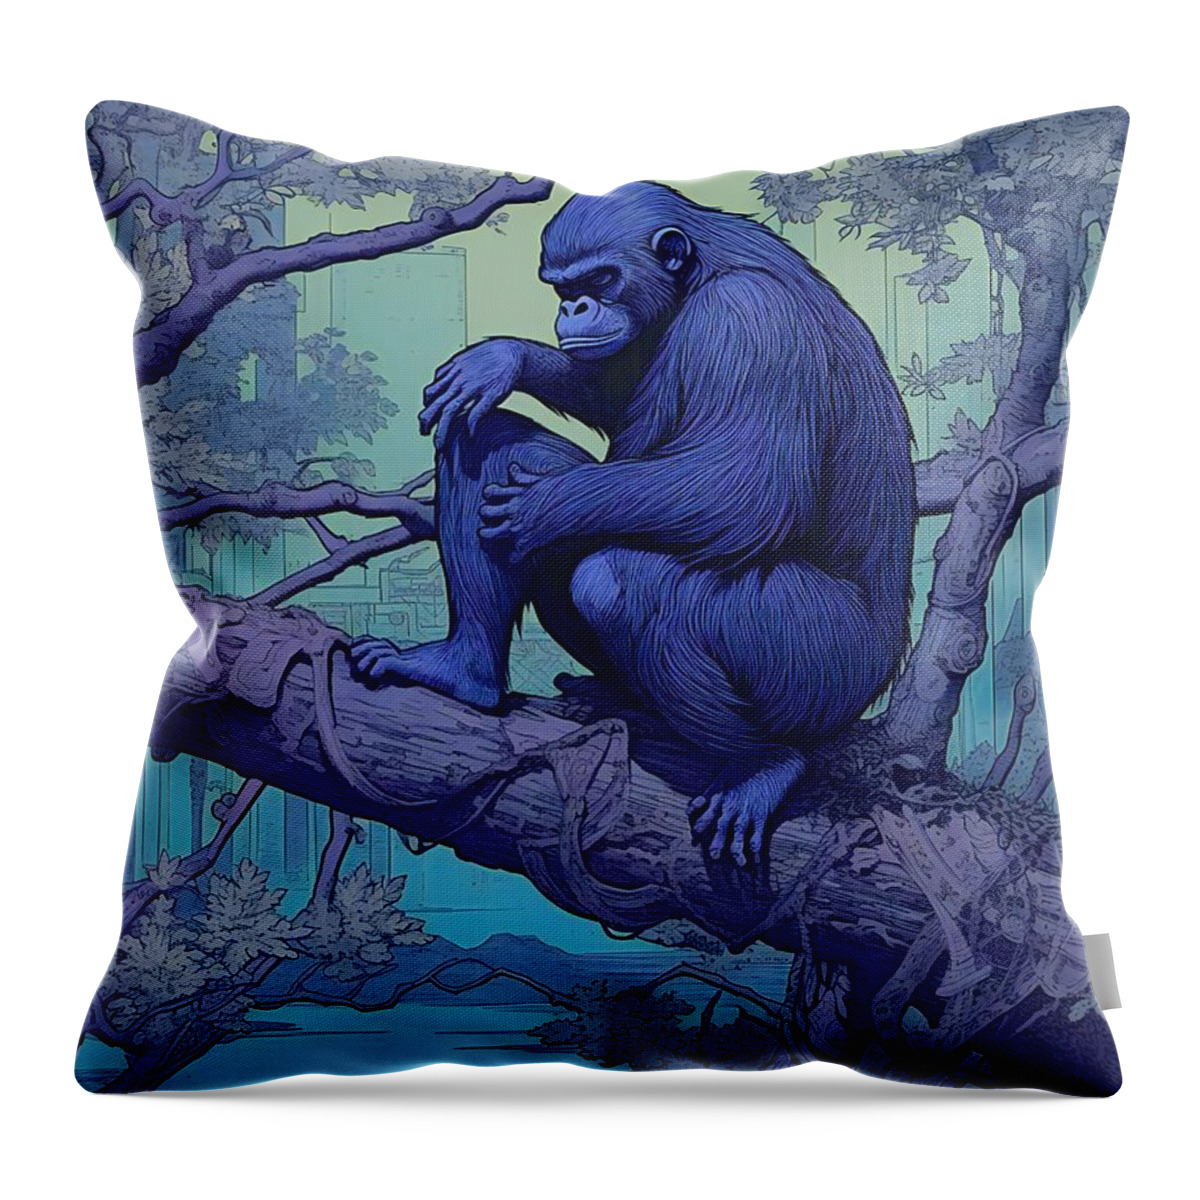 Cross River Gorilla Throw Pillow featuring the digital art Cross River Gorilla by Caito Junqueira